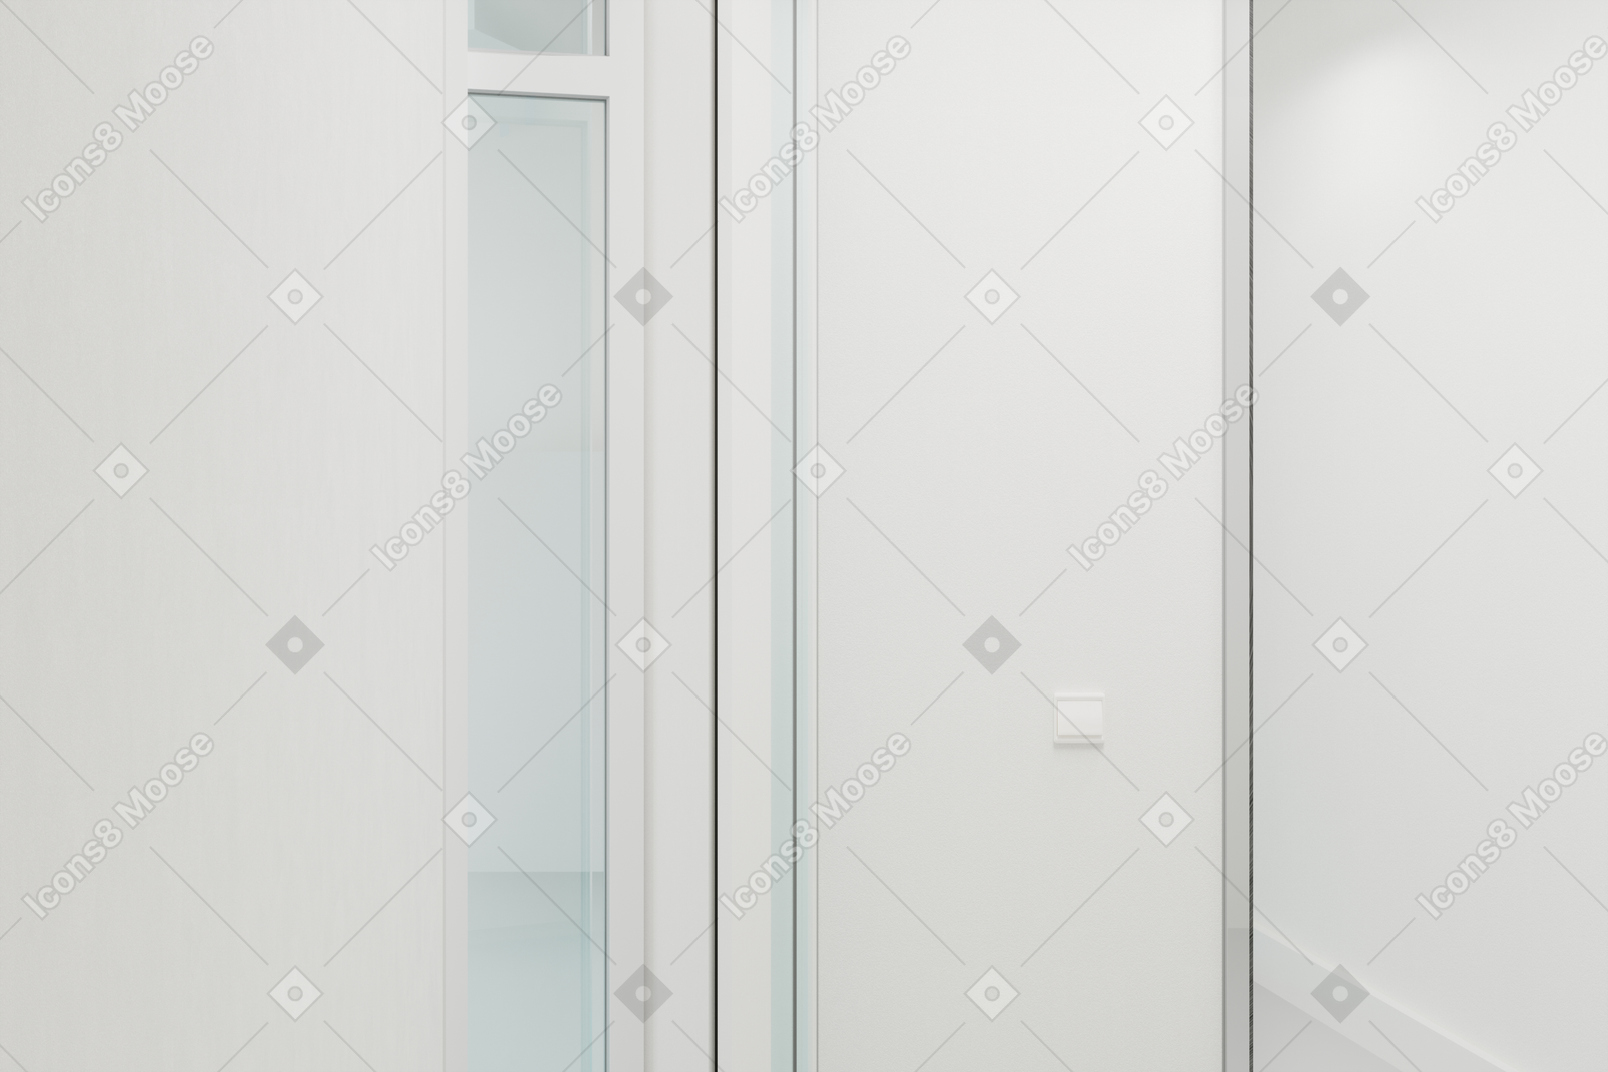 Pasillo blanco con puerta de cristal